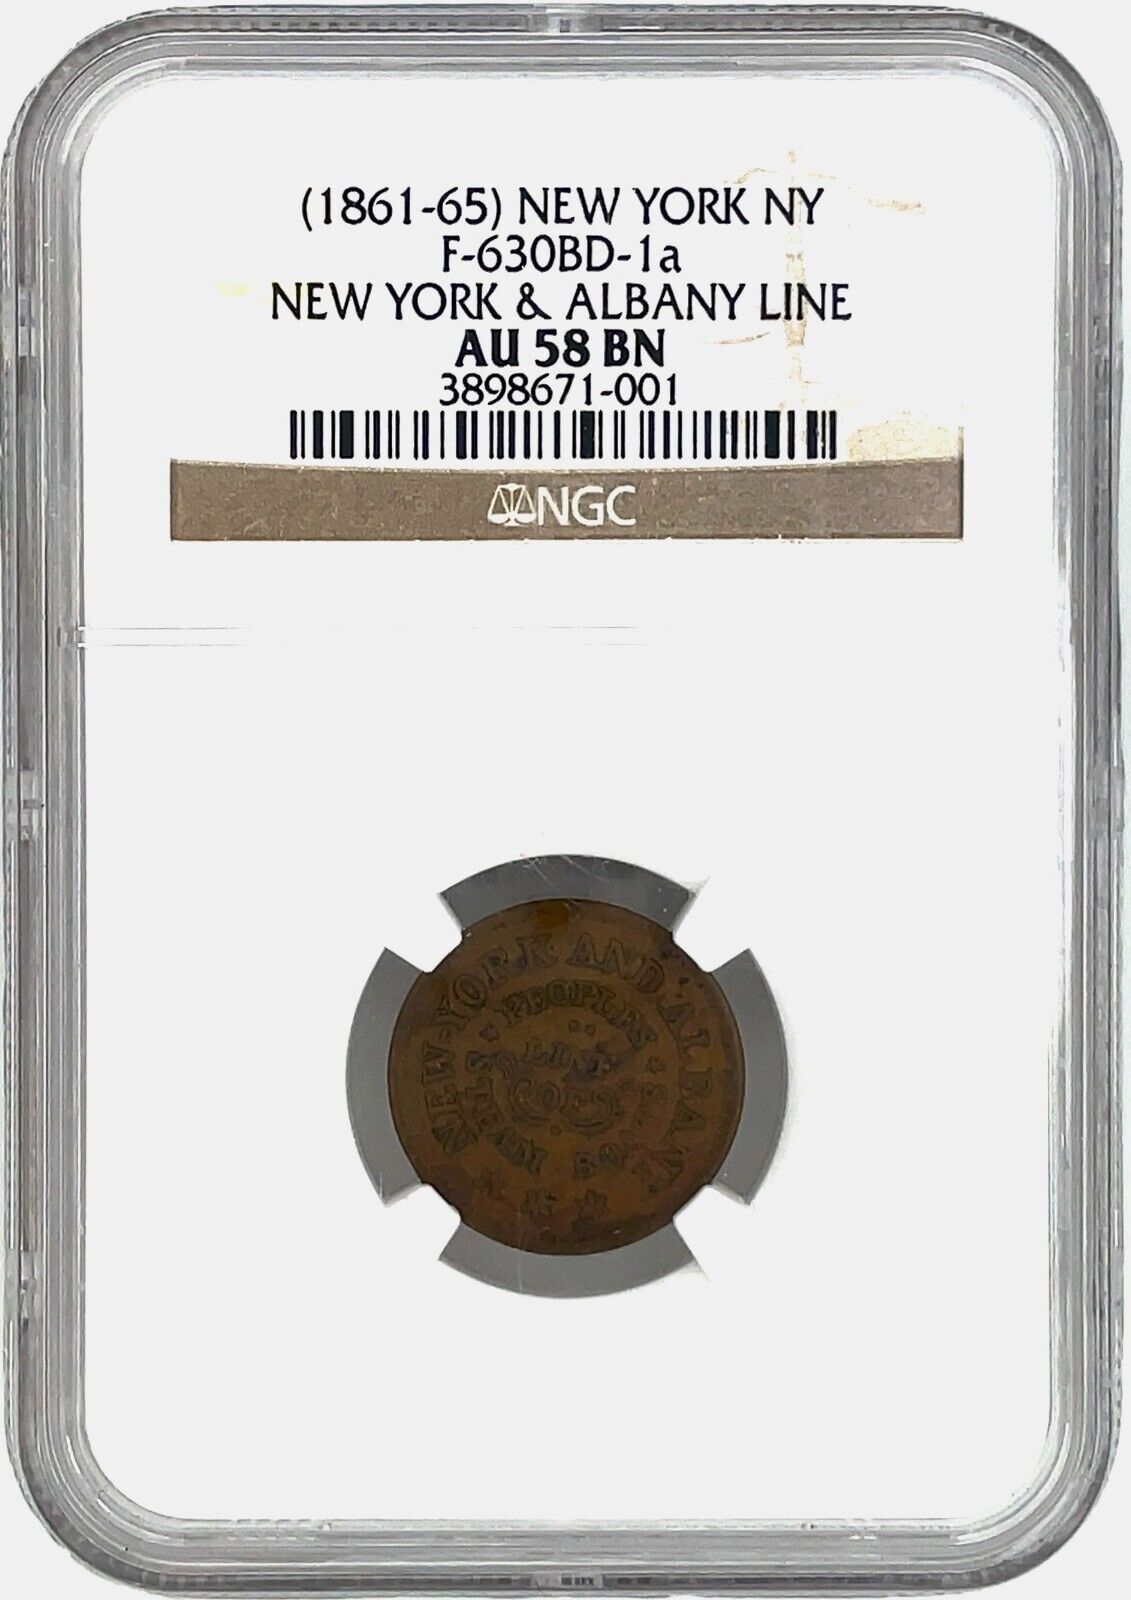 (1861-65) New York NY F-630BD-1a NEW YORK & ALBANY LINE NGC AU 58 BN